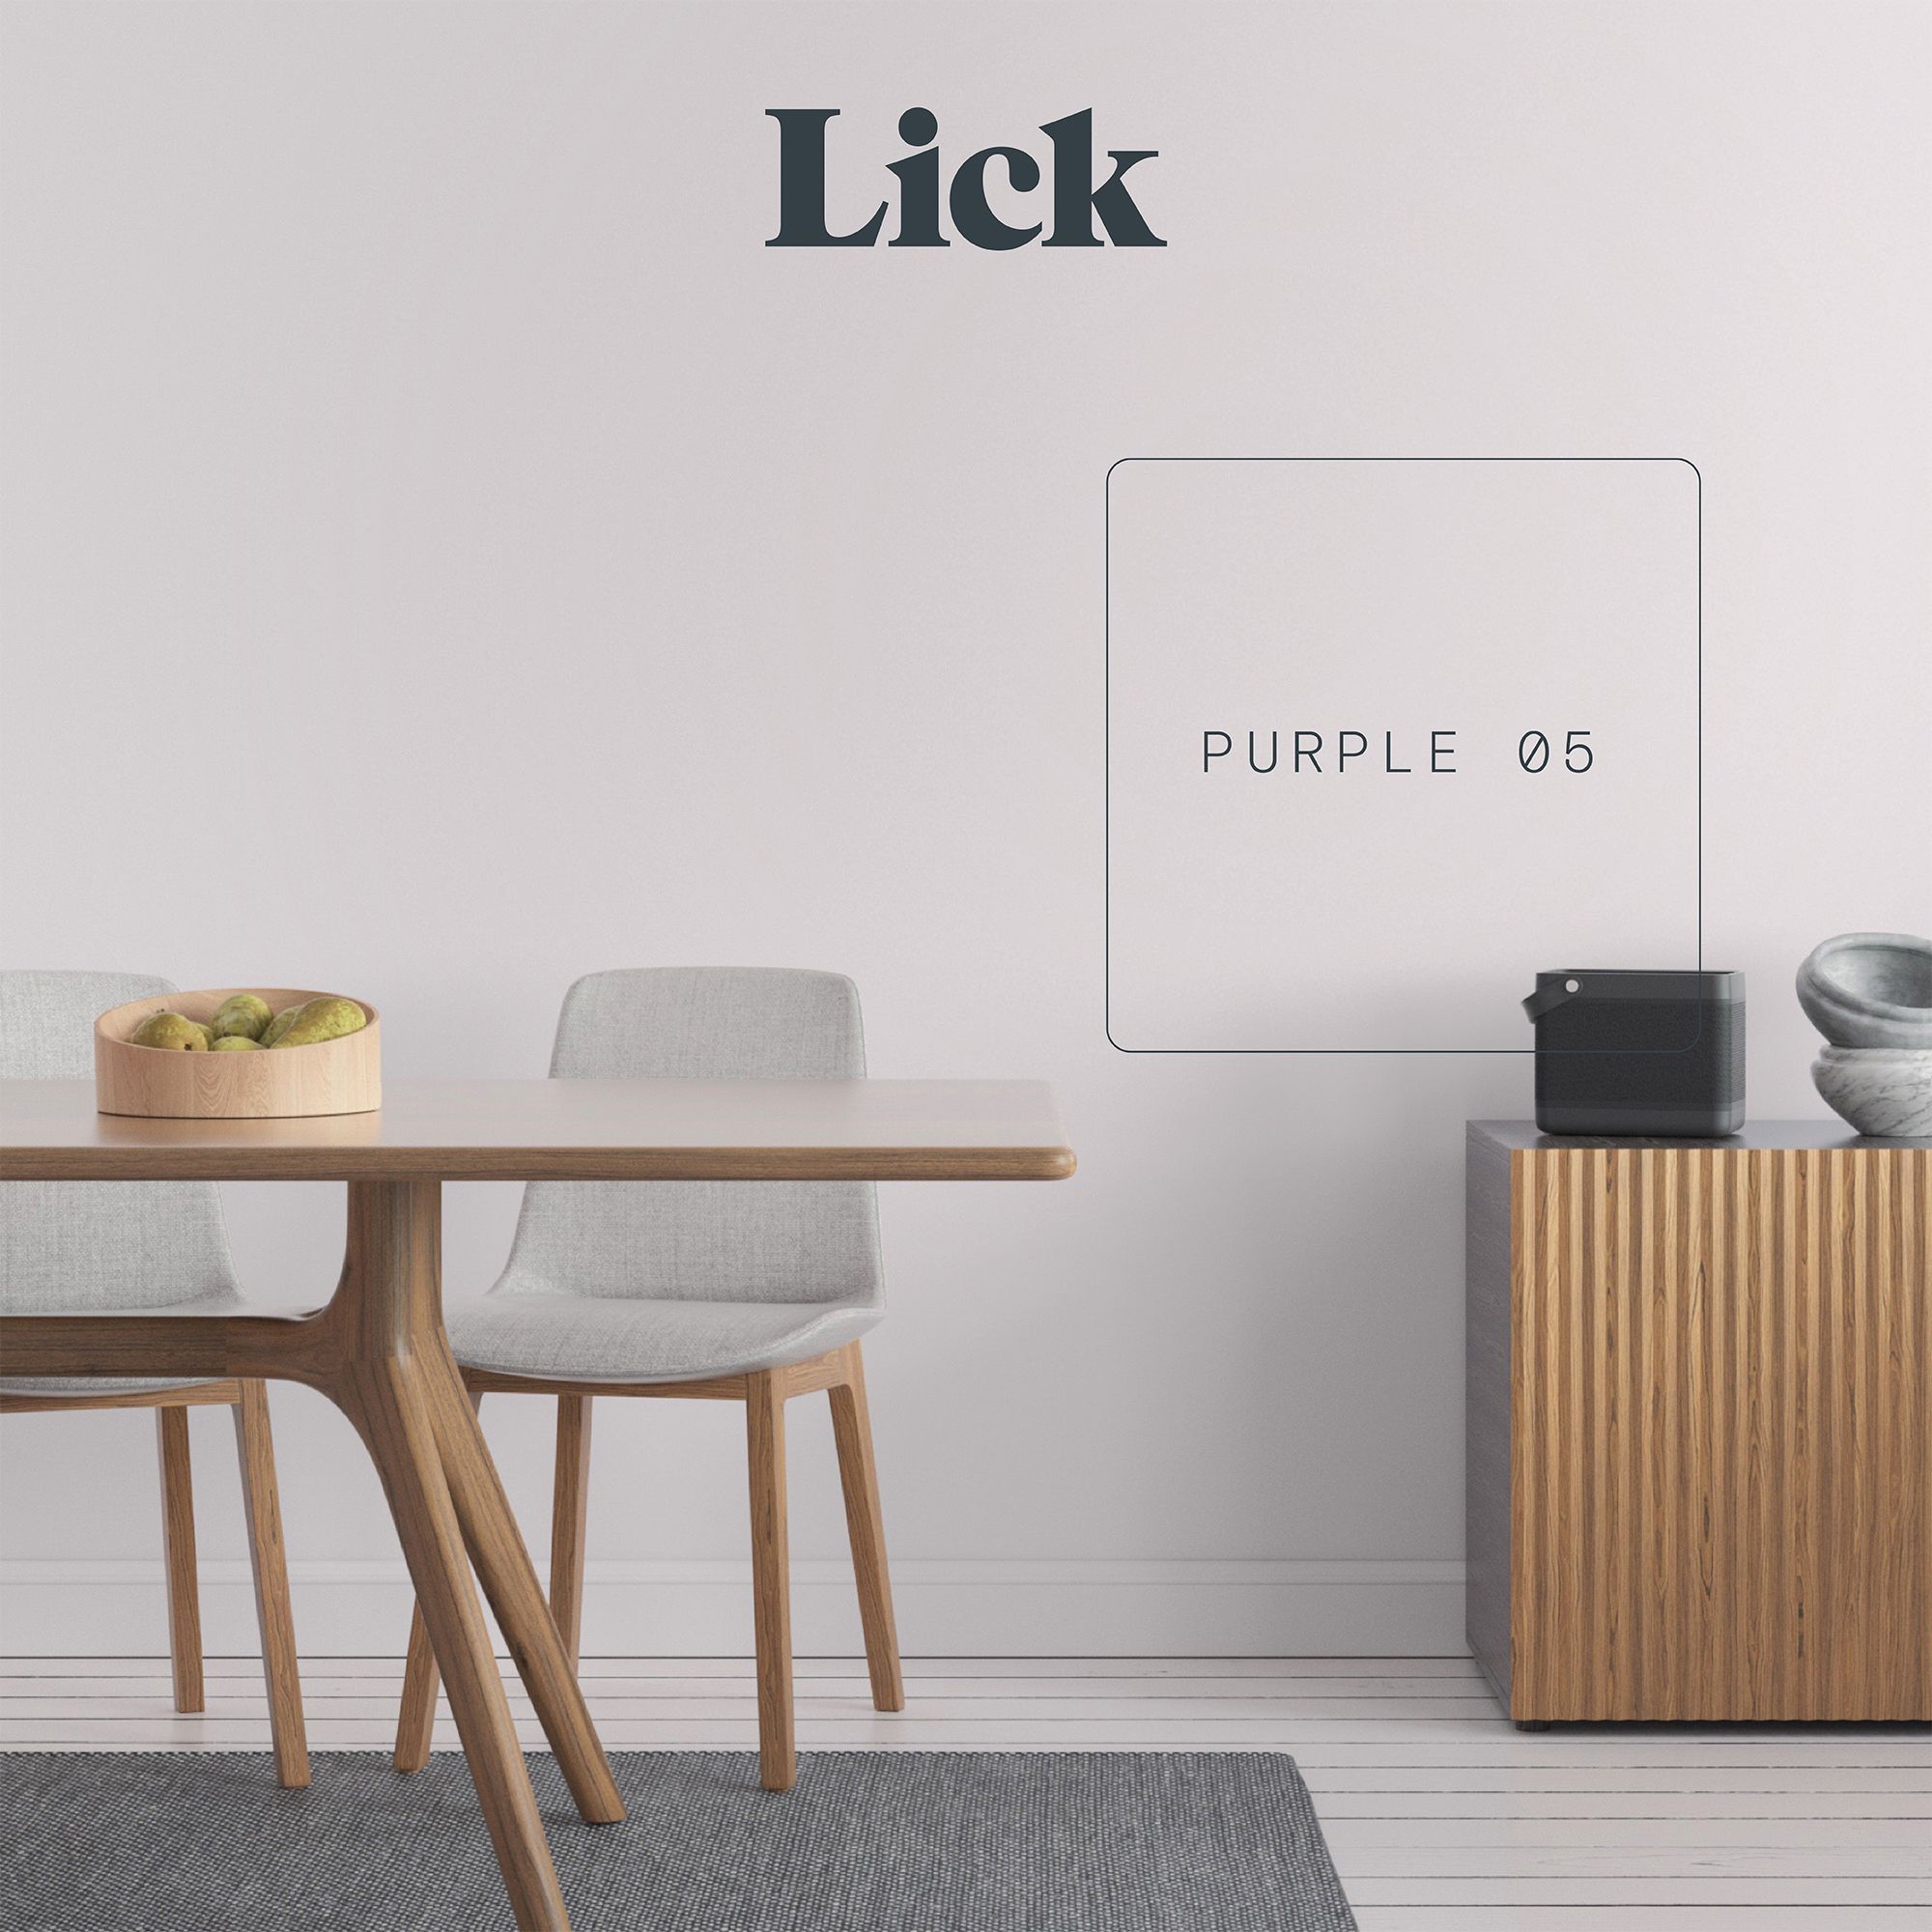 Lick Purple 05 Peel & stick Tester